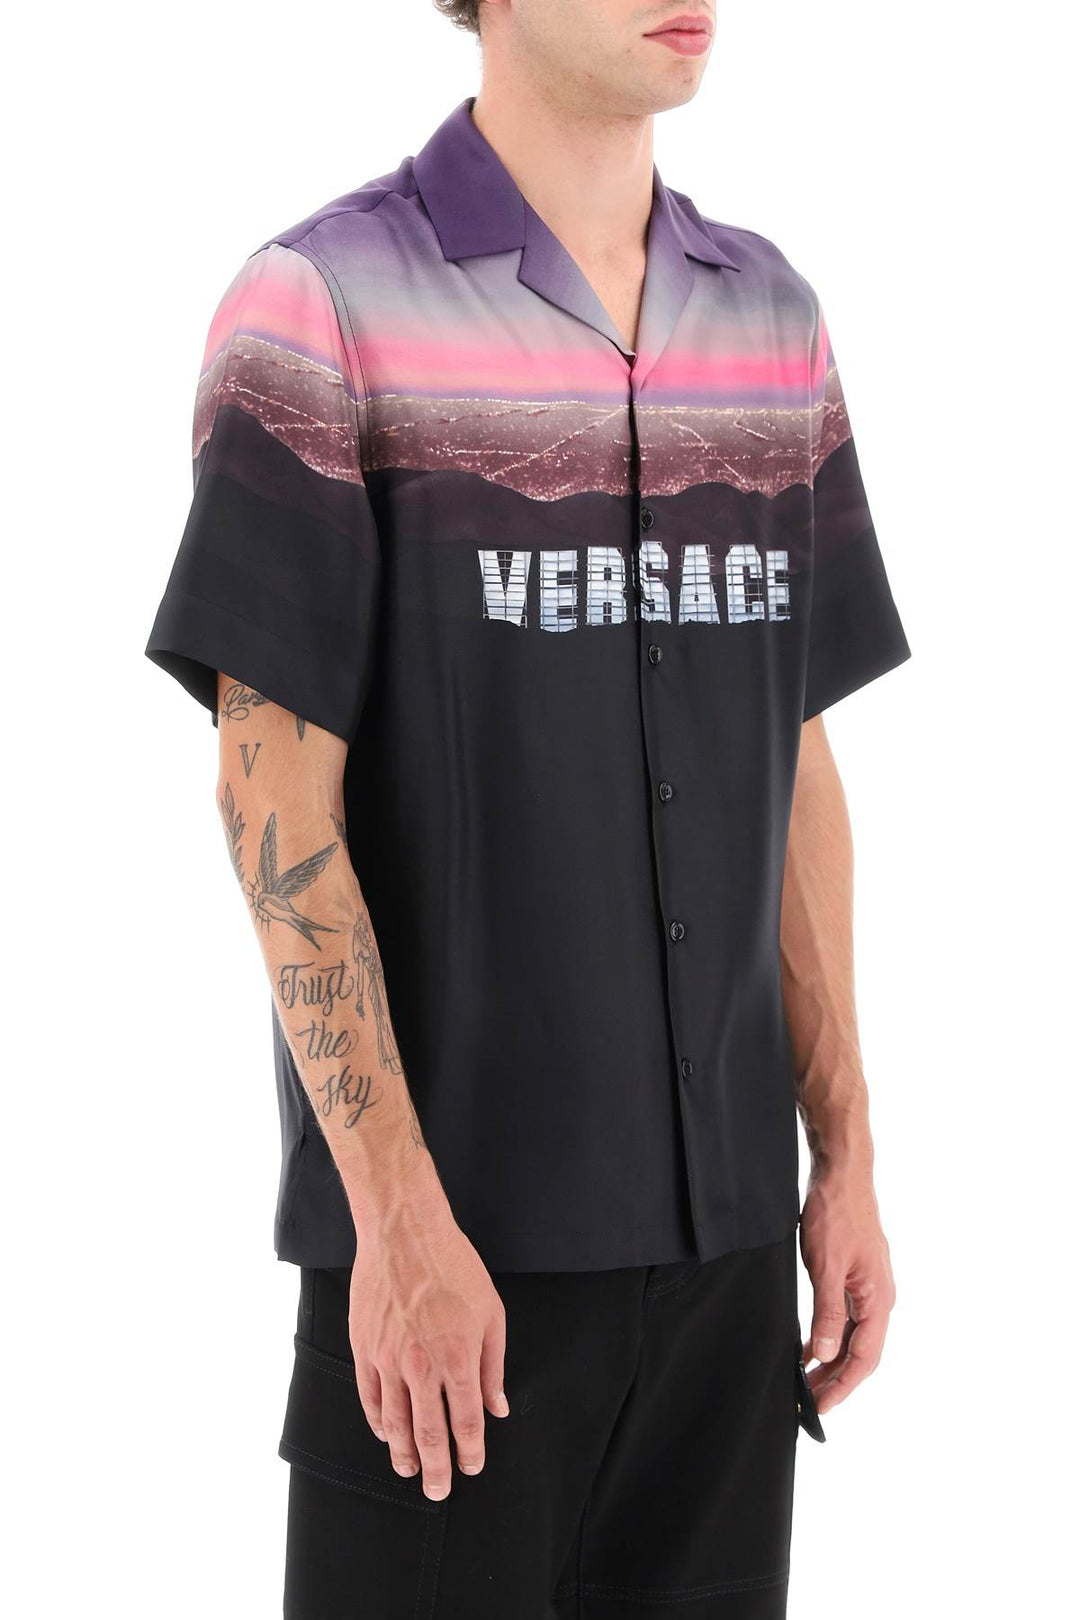 Camicia Bowling Versace Hills - Versace - Uomo